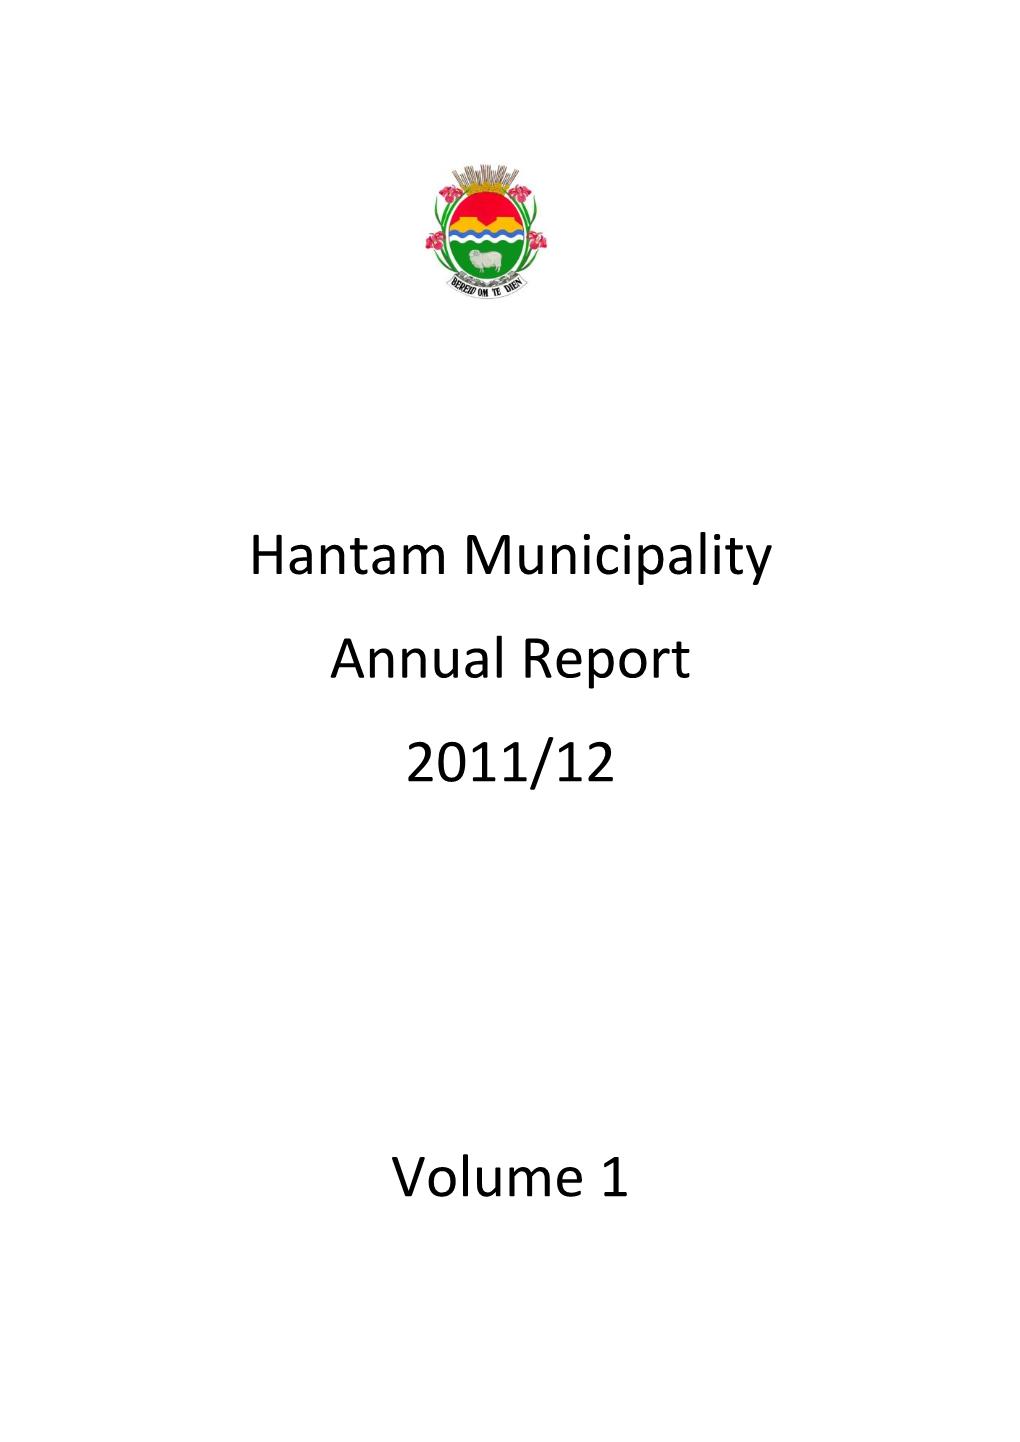 Hantam Municipality Annual Report 2011/12 Volume 1